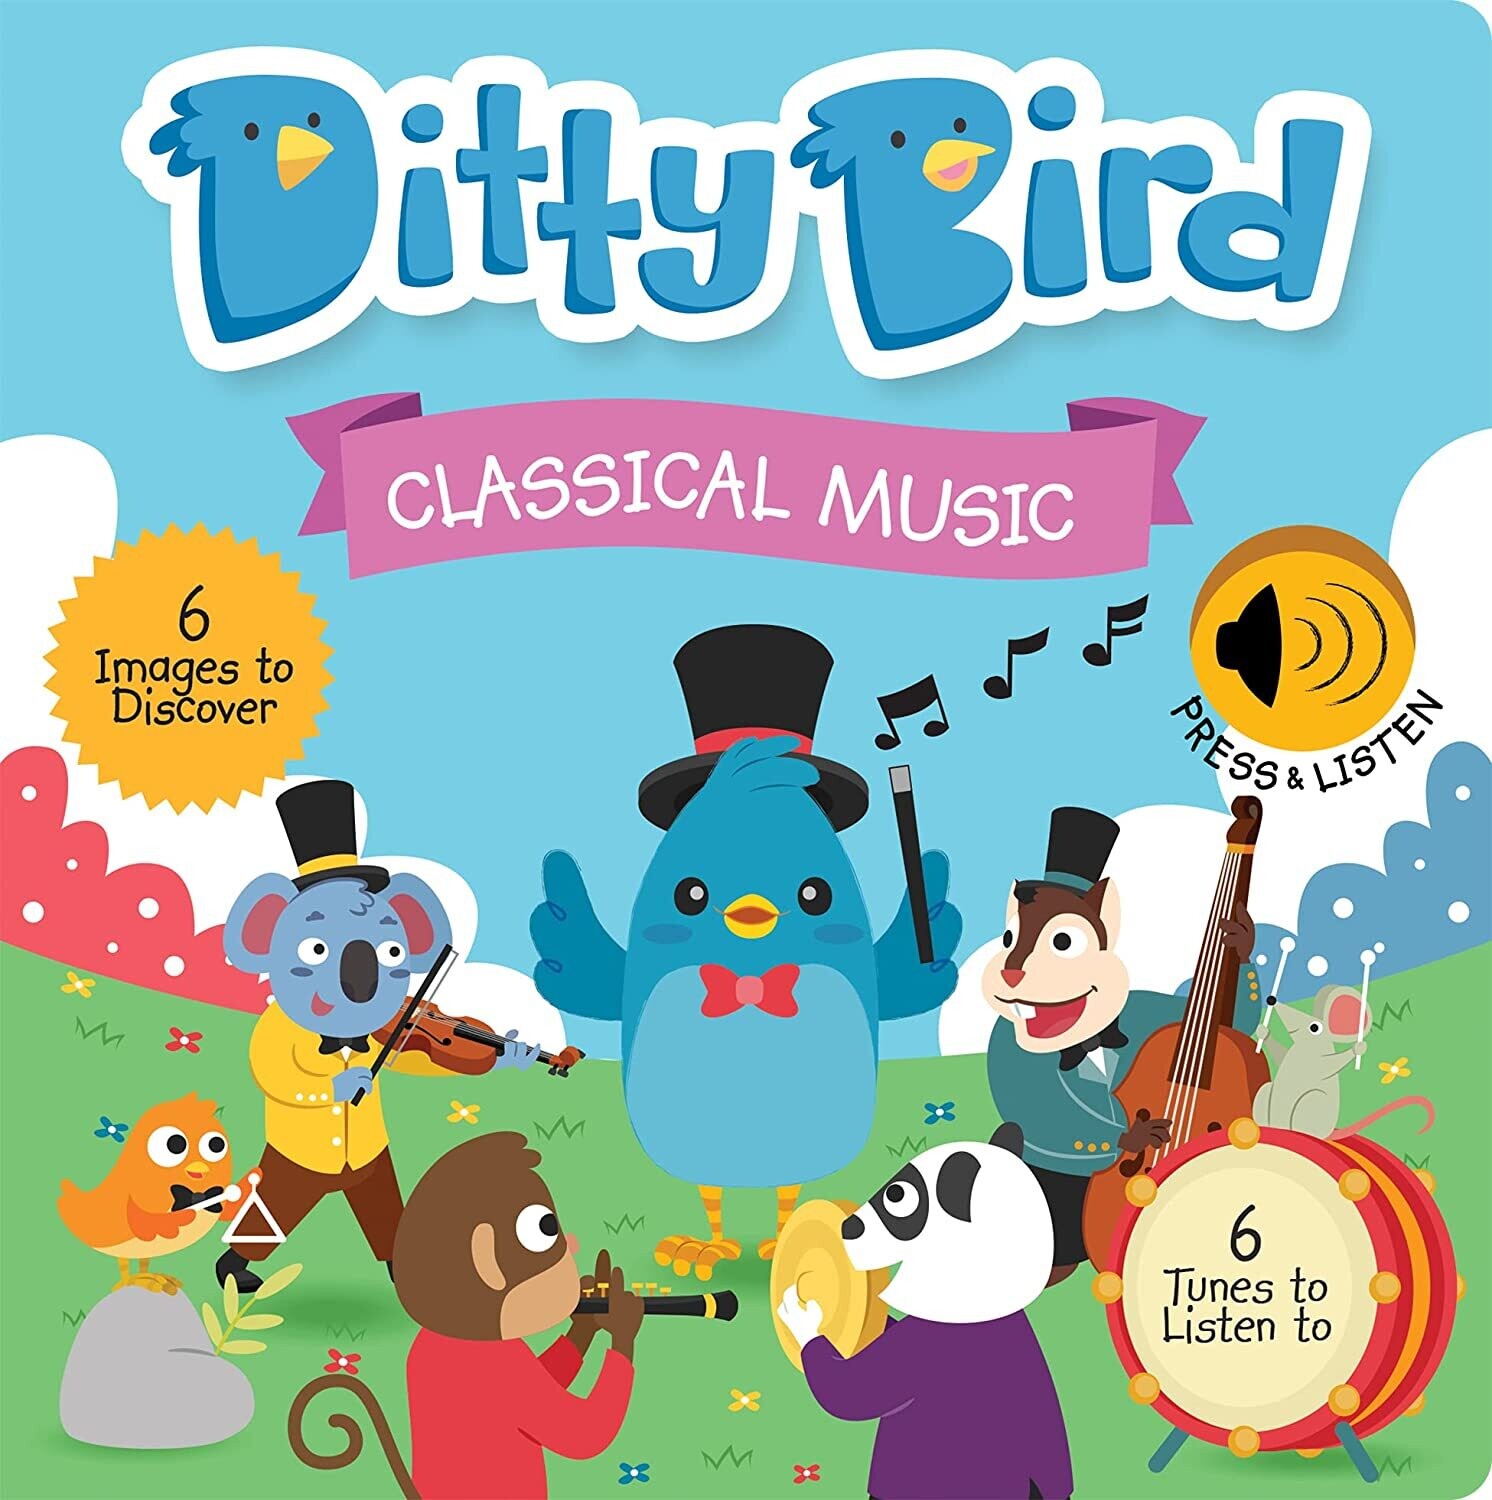 Ditty Bird Classical Music